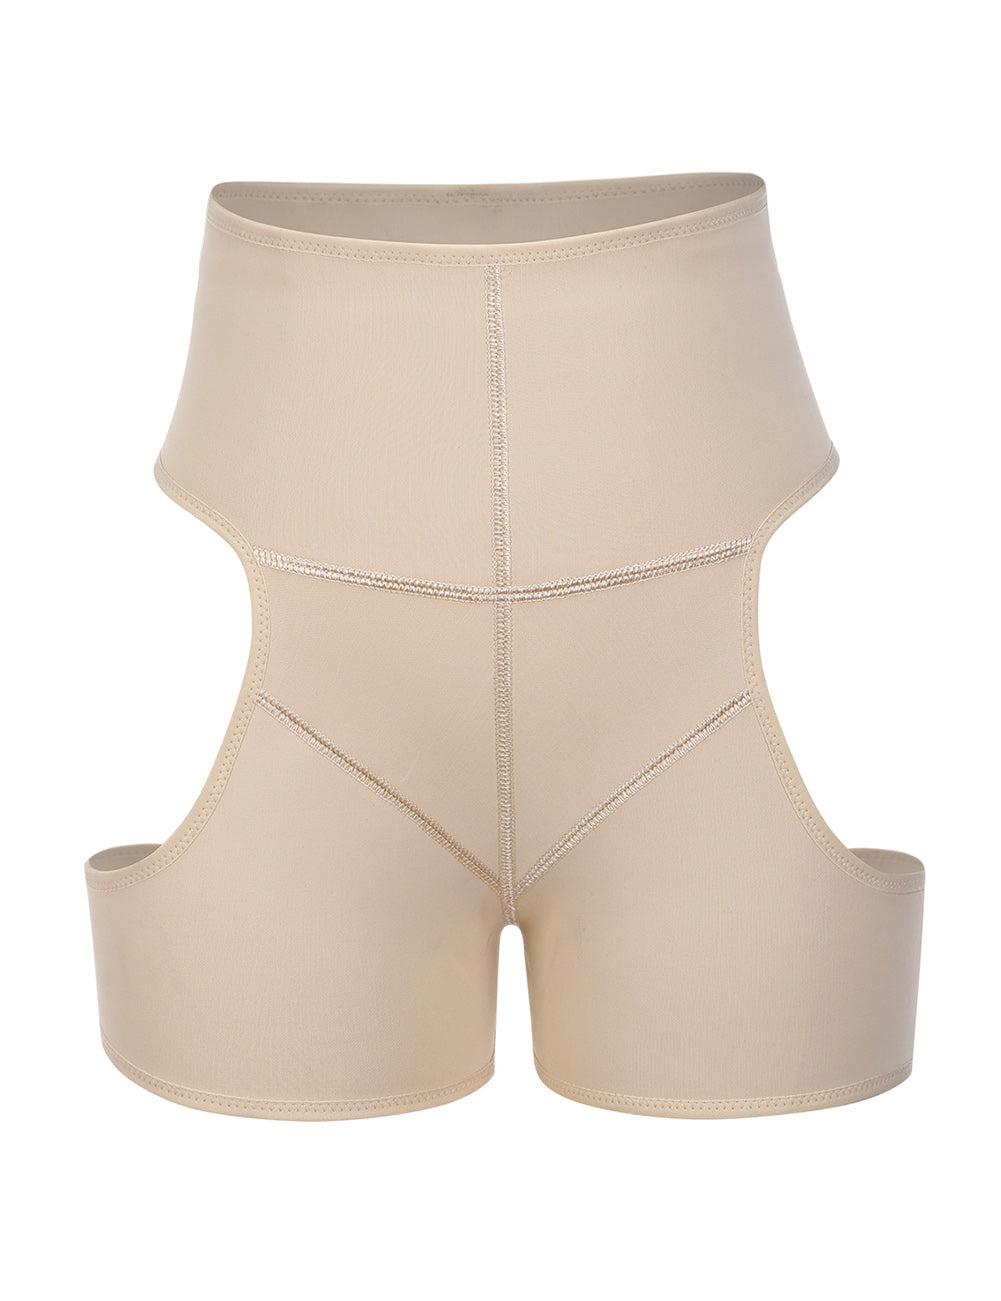 Shapeware - High Rise Bottom Enhancing Panties (Nude Color)